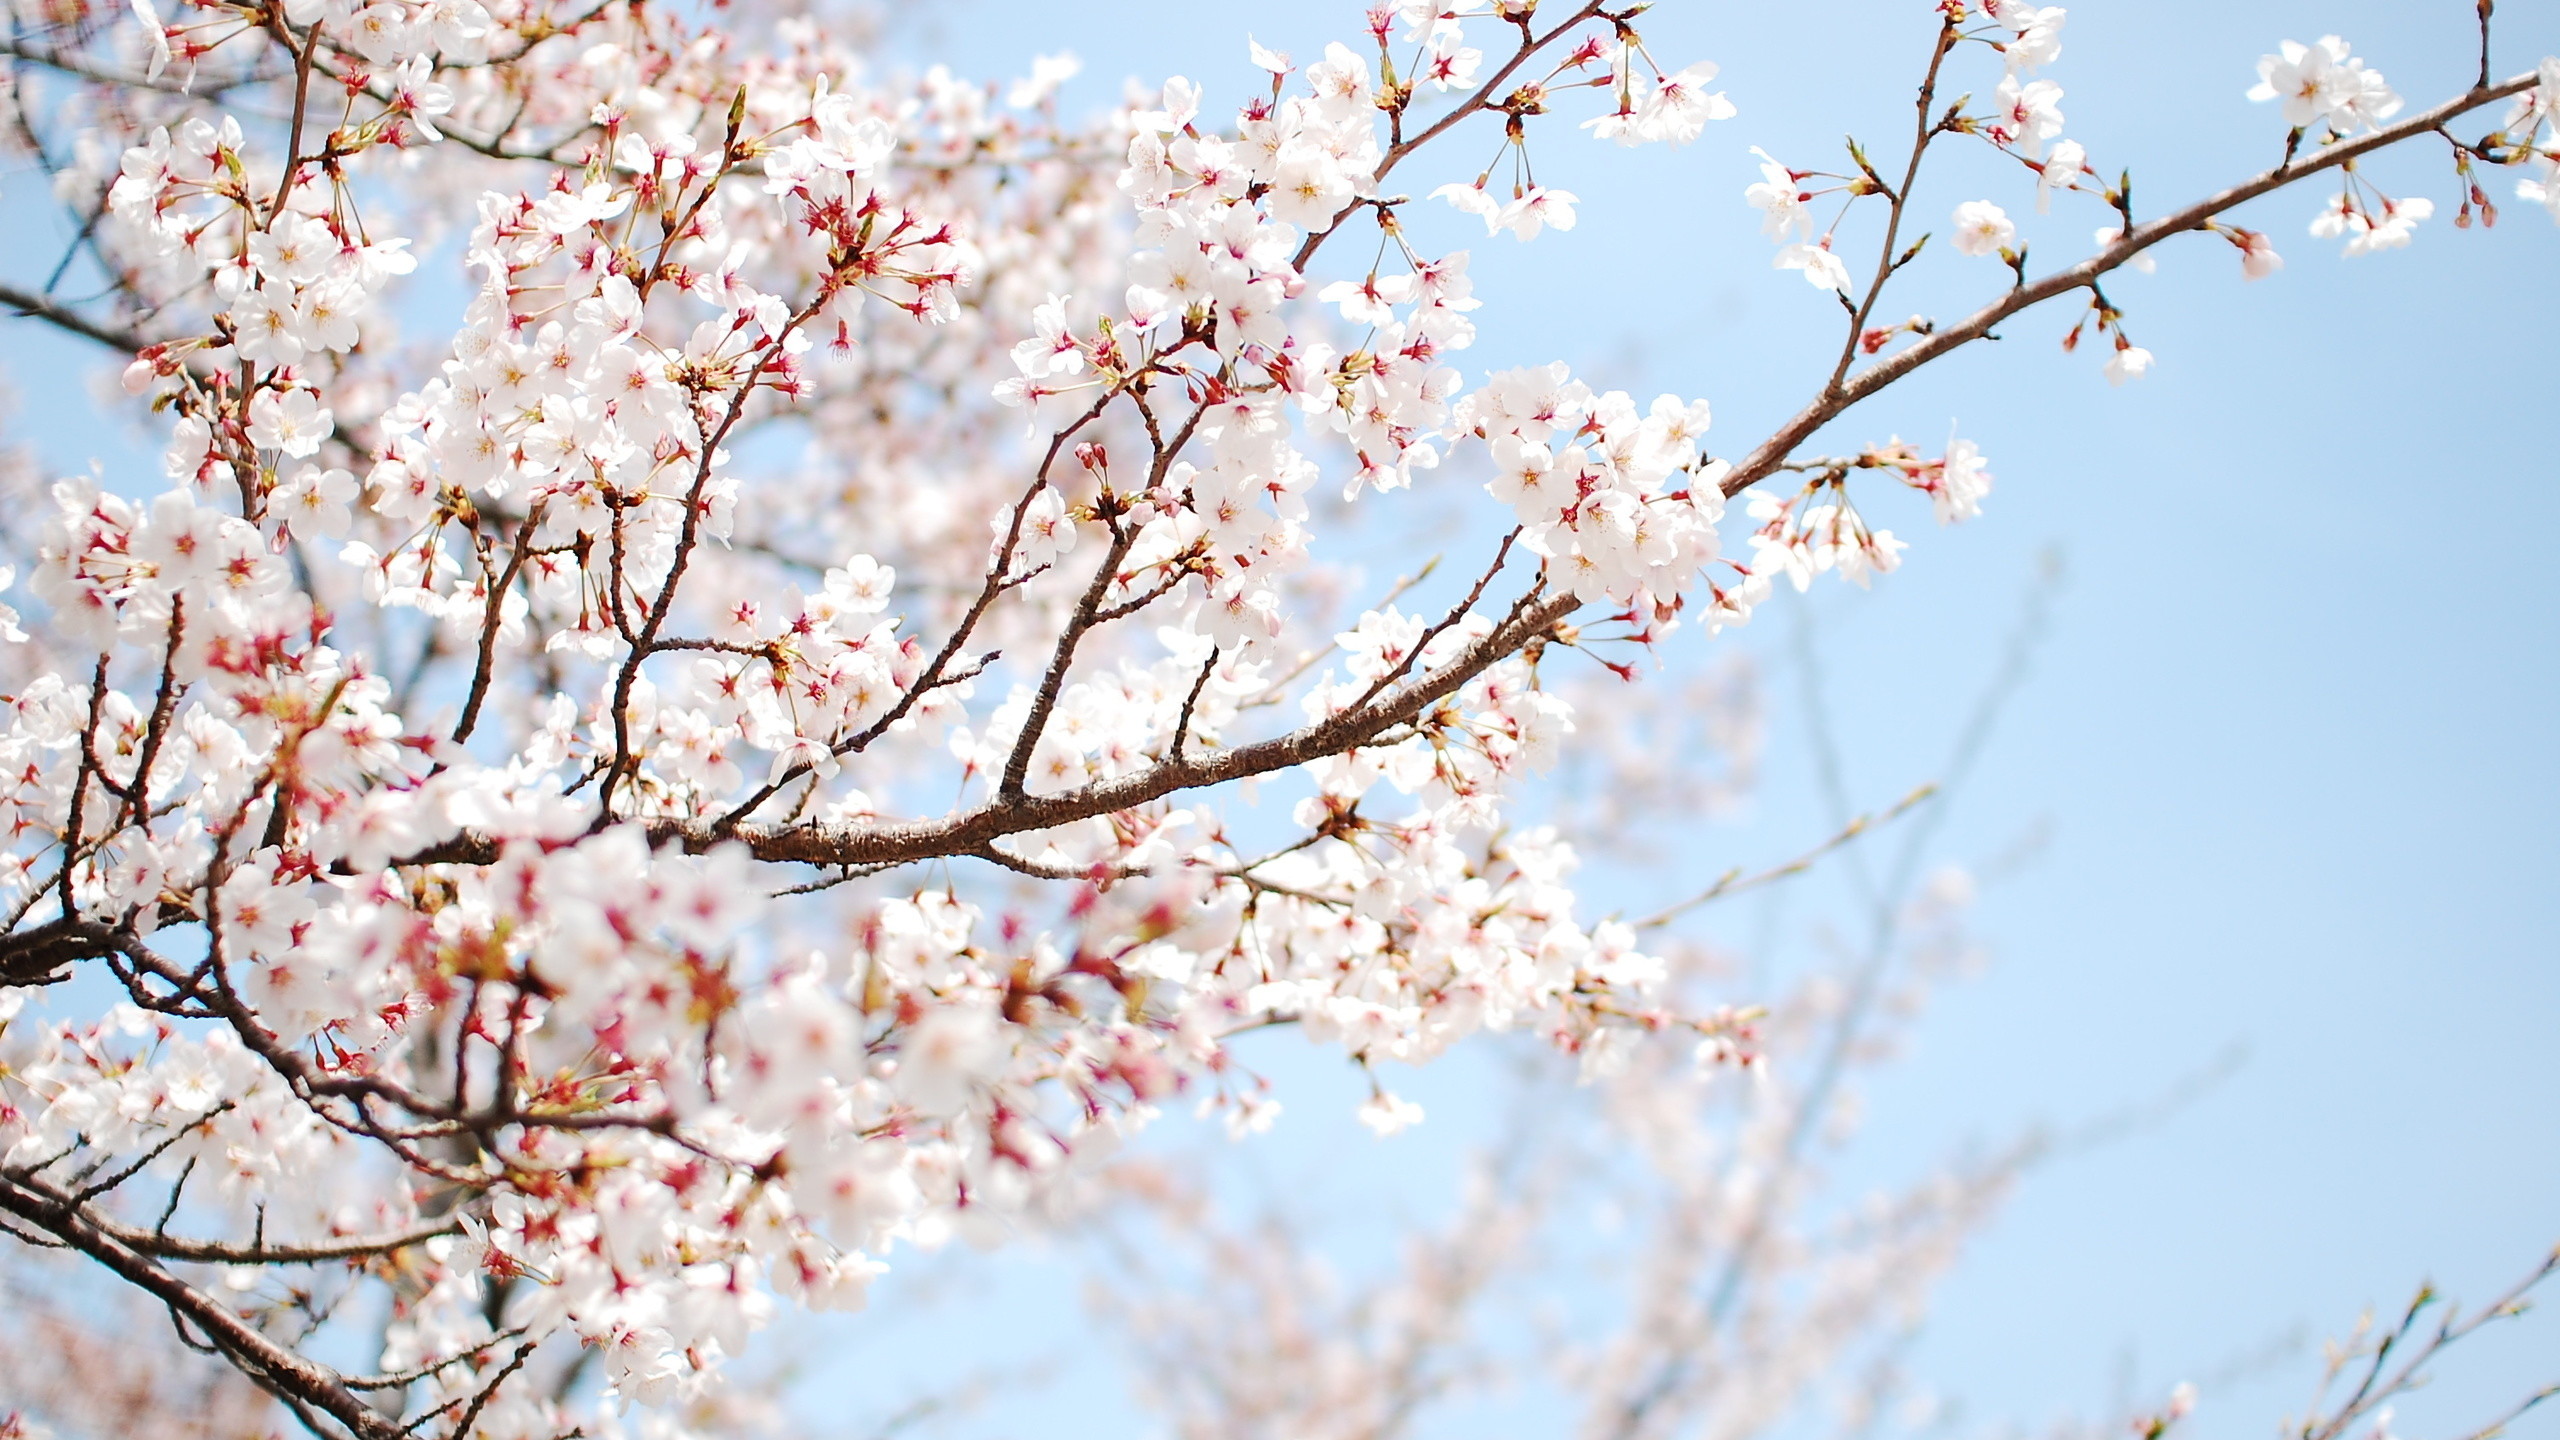 2560x1440 Cherry blossom desktop wallpaper src Â· 1000+ images about cherry blossoms  on Pinterest | Nature, Spring